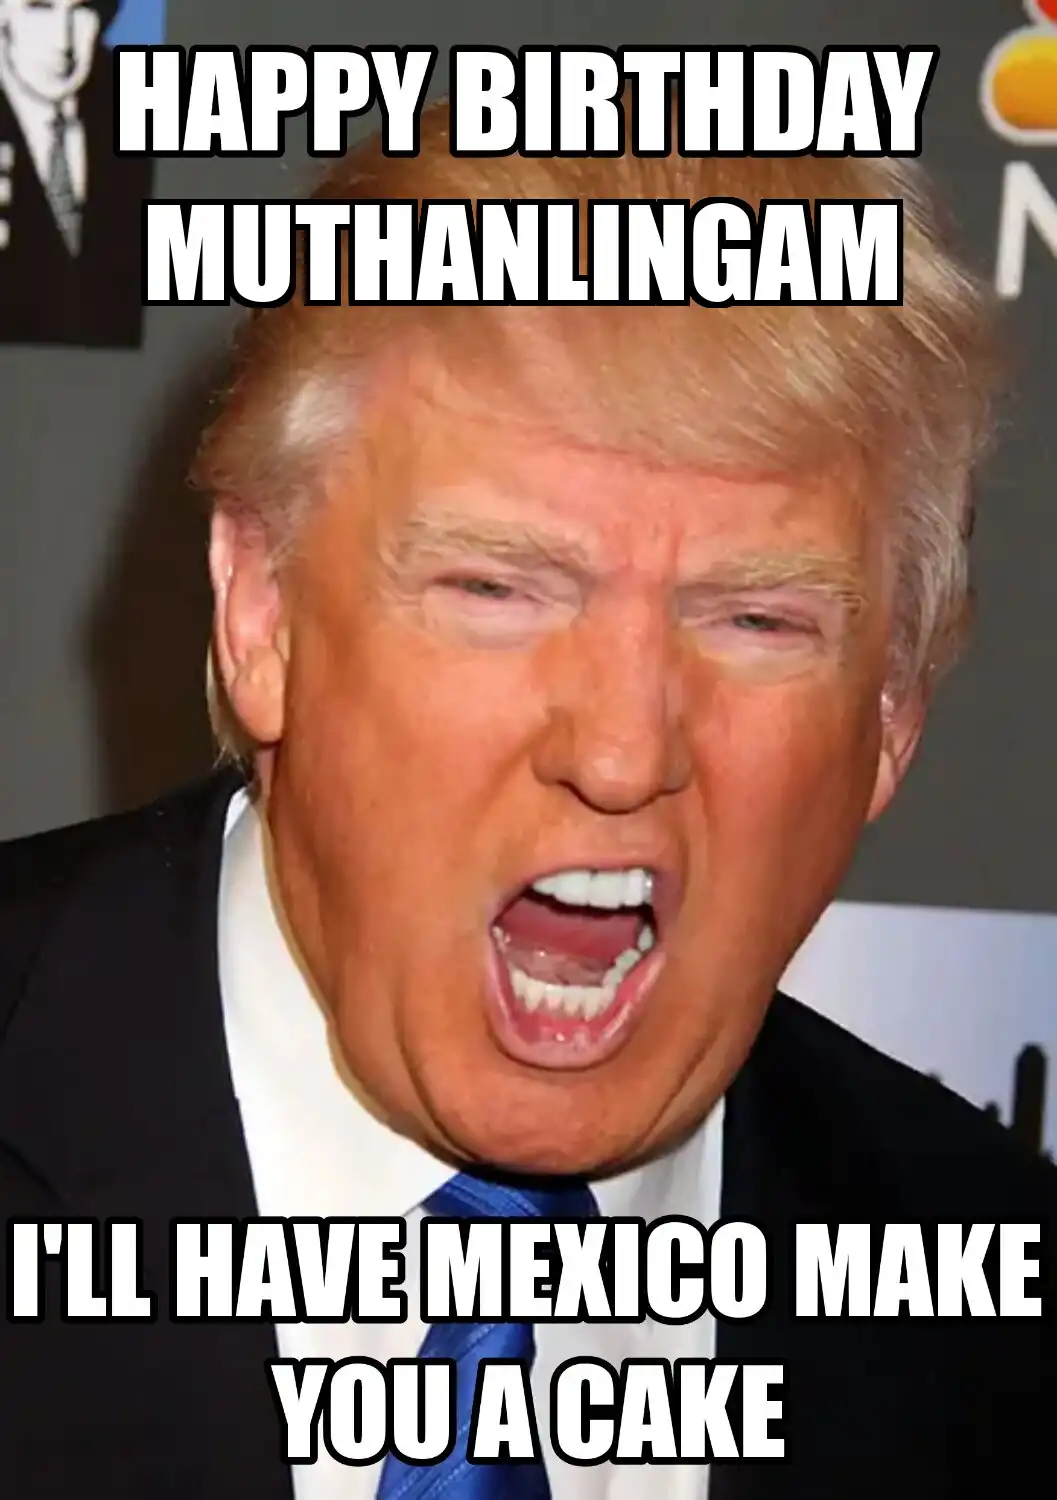 Happy Birthday Muthanlingam Mexico Make You A Cake Meme